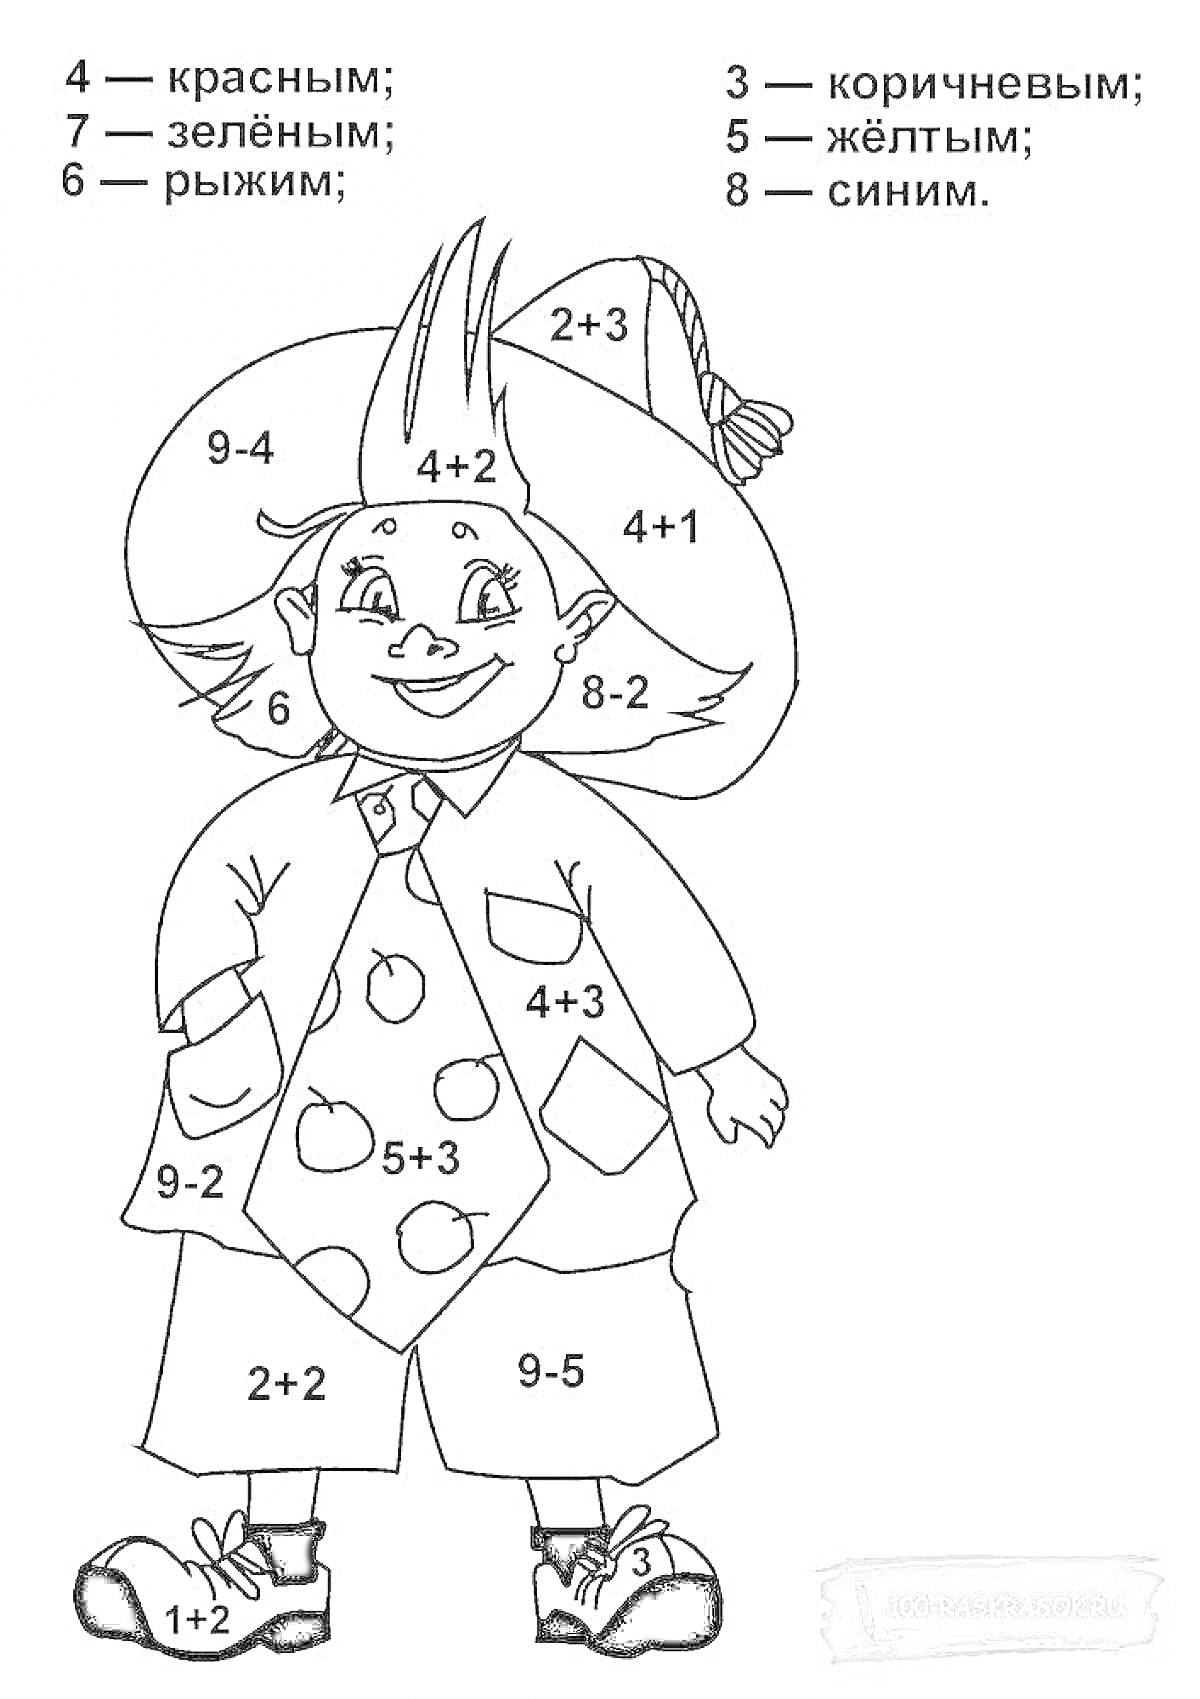 Клоун с математическими примерами на одежде и волосах